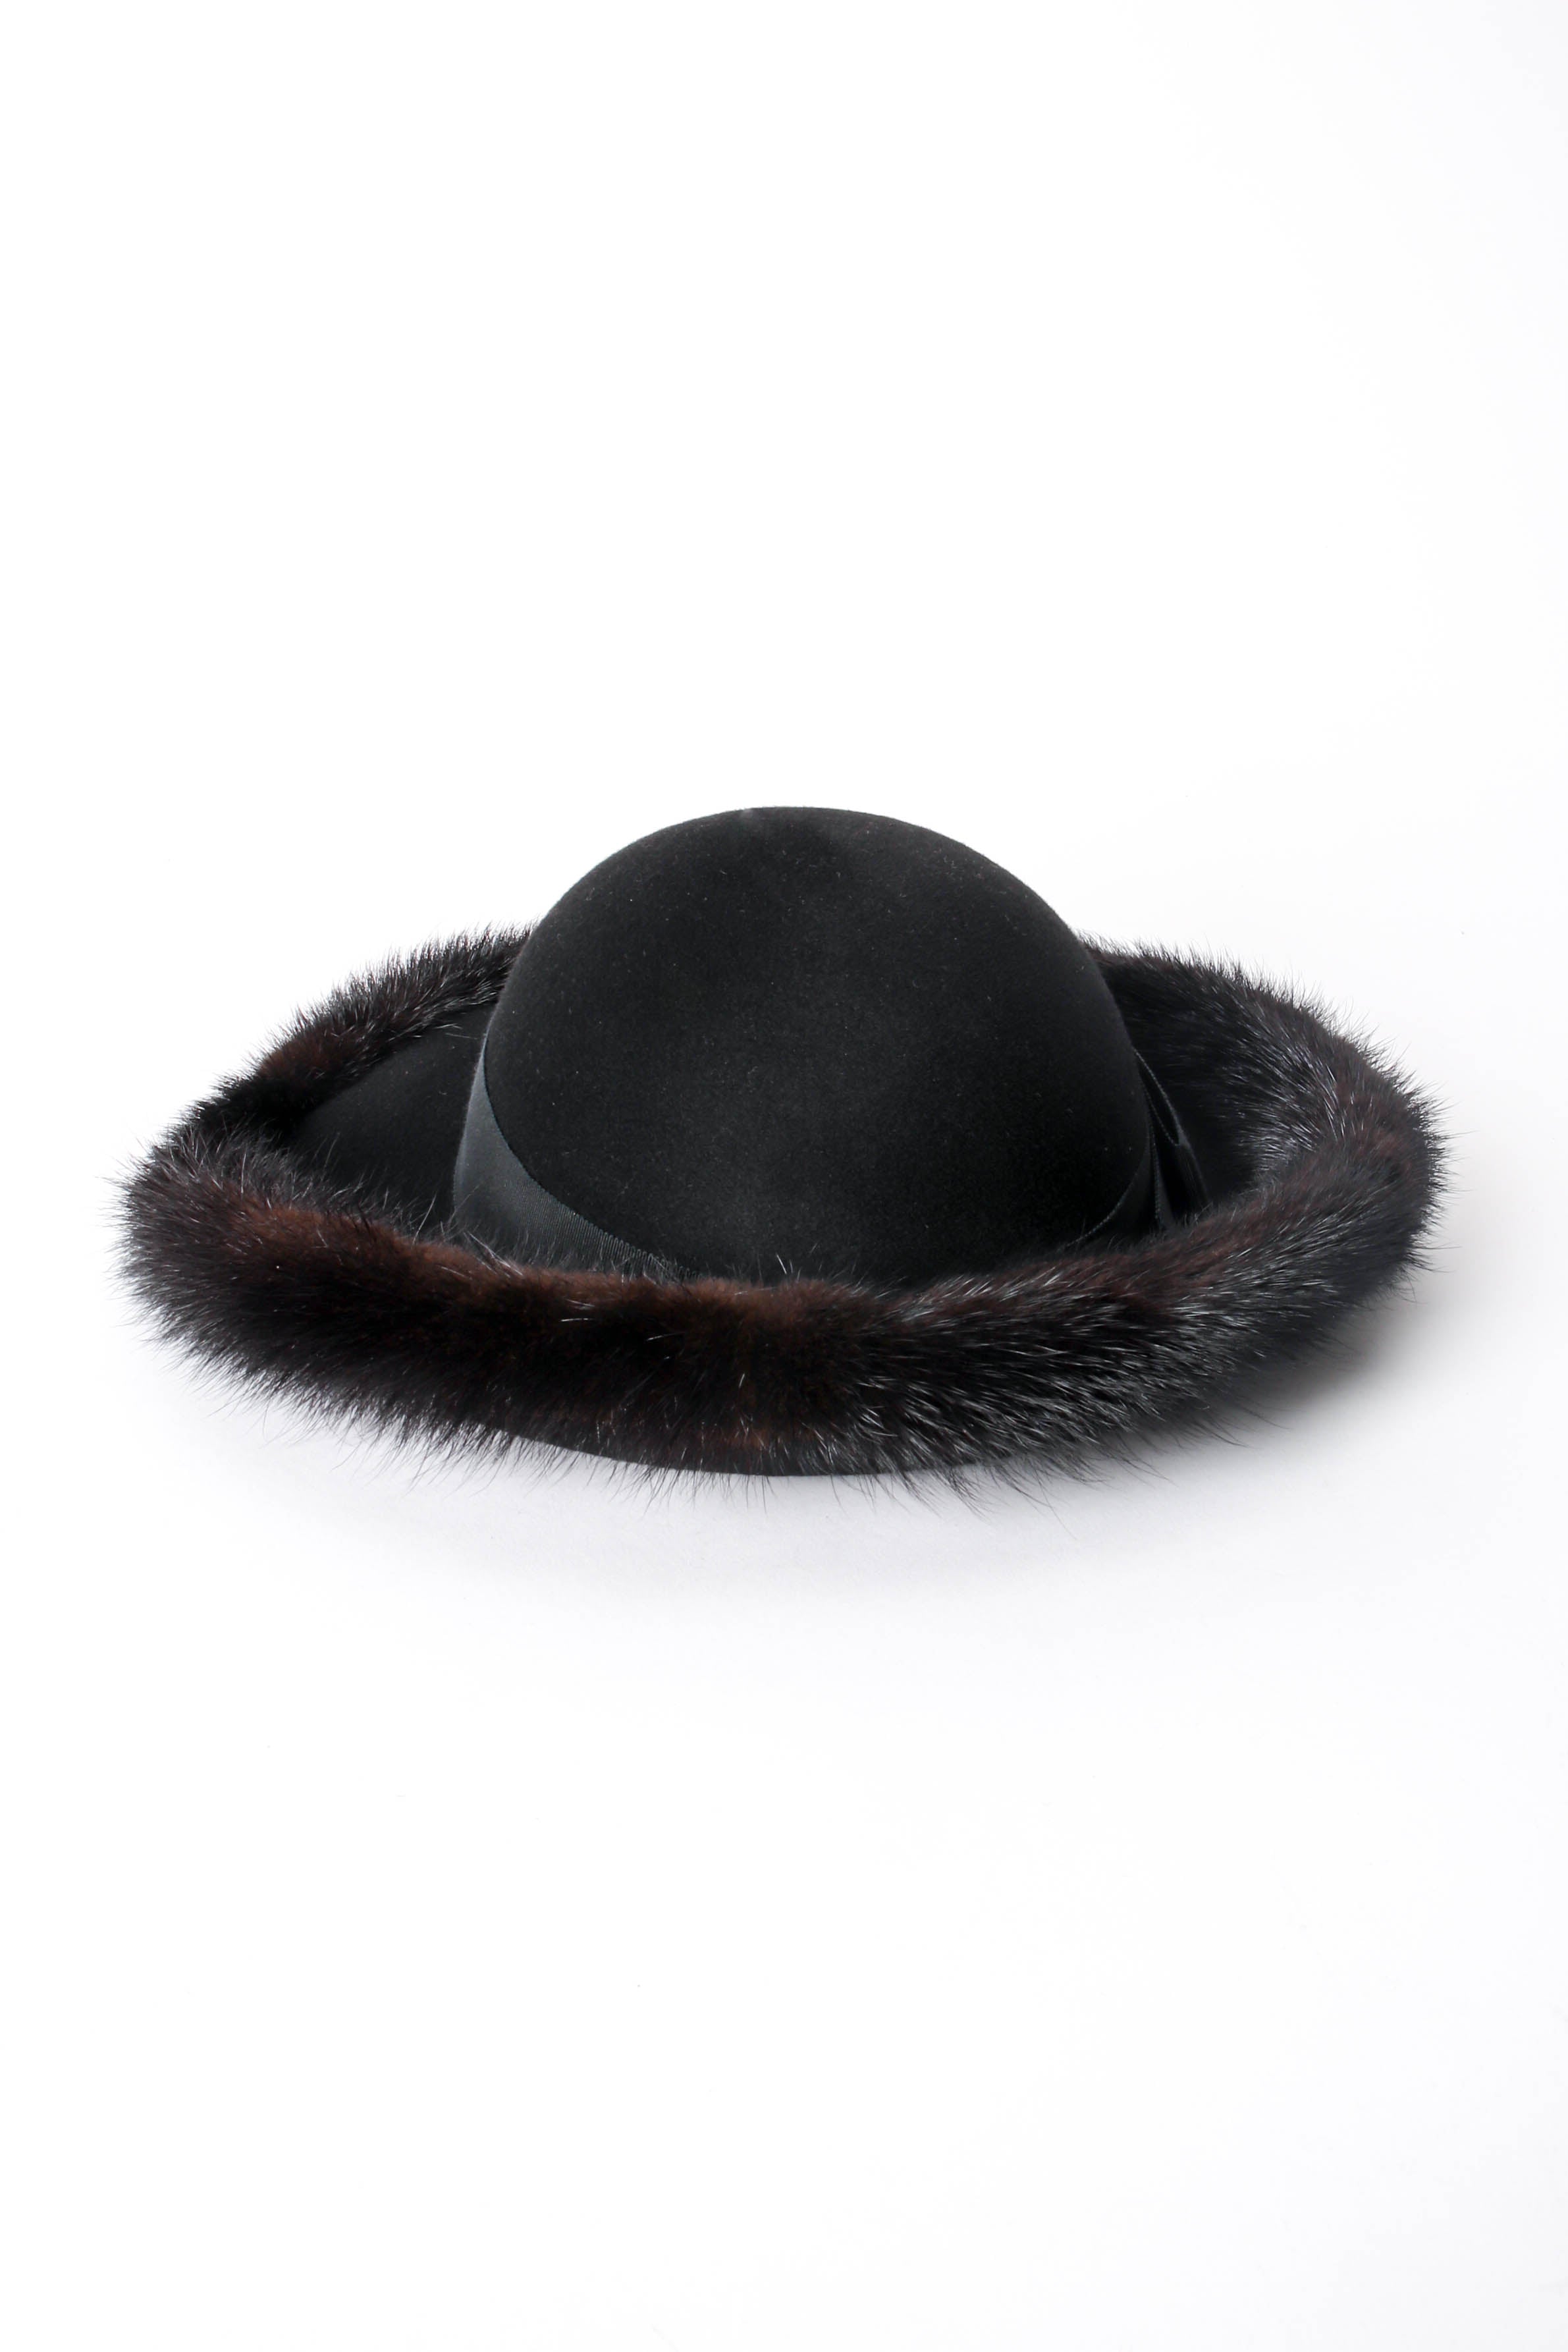 Vintage Mr. John Excello Fur-Trimmed Petite Halo Hat back at Recess Los Angeles